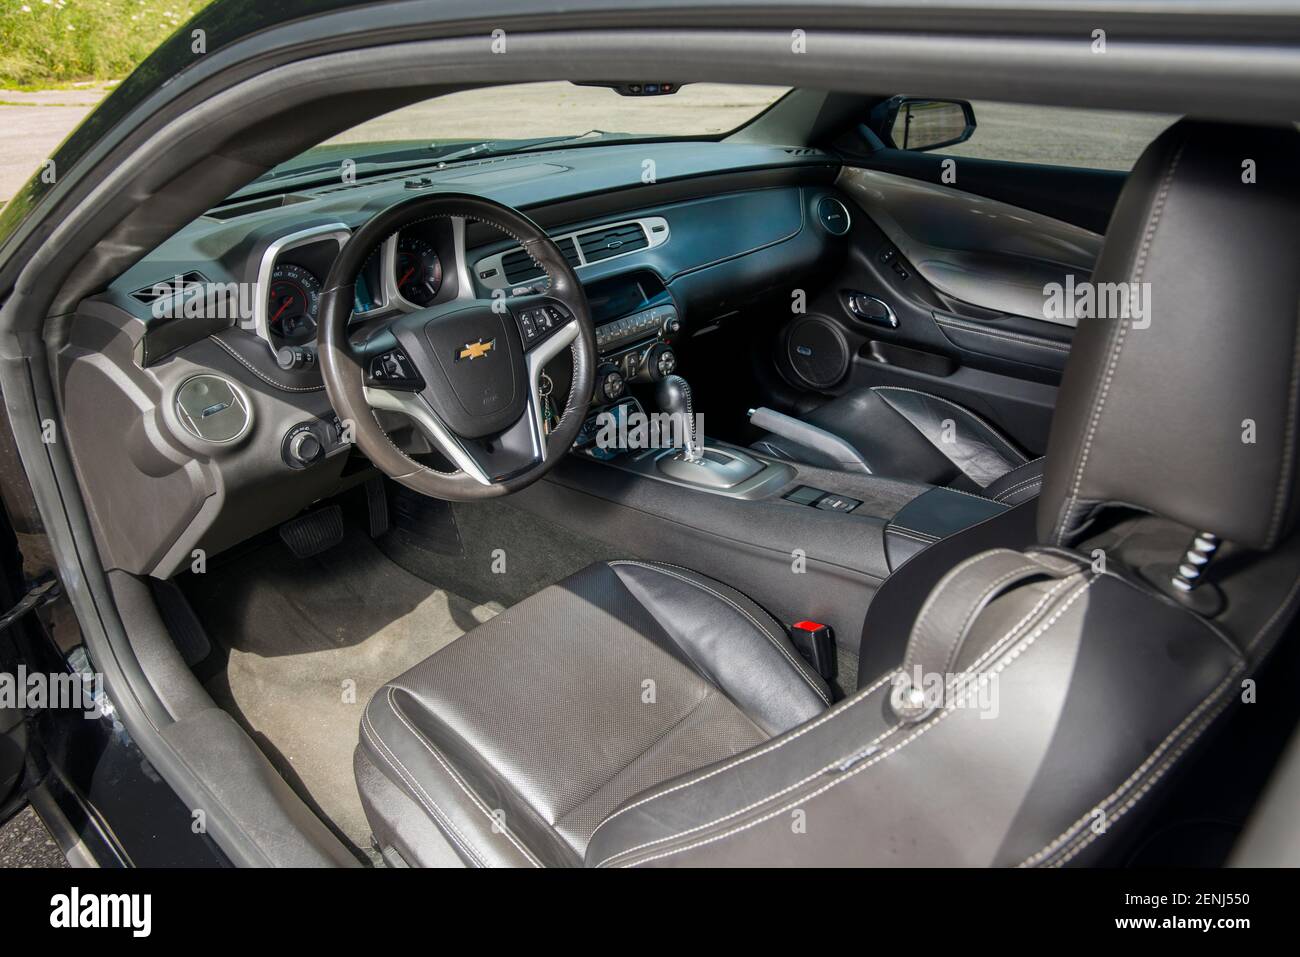 Chevrolet Camaro dashboard Stock Photo